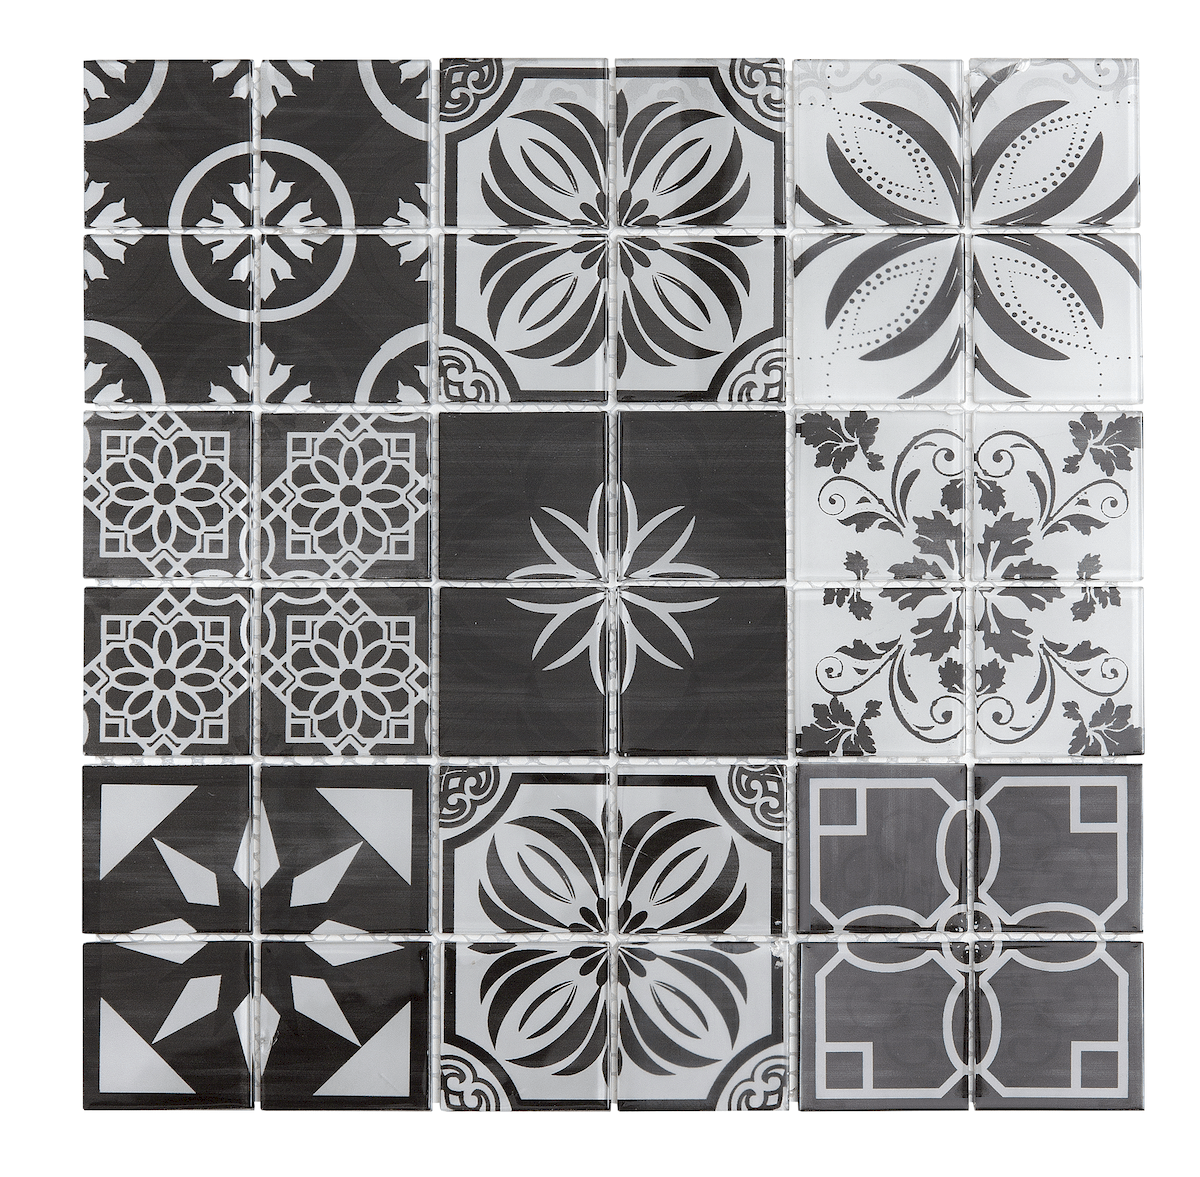 E-shop Skleněná mozaika Premium Mosaic černobílá 30x30 cm lesk PATCHWORK300